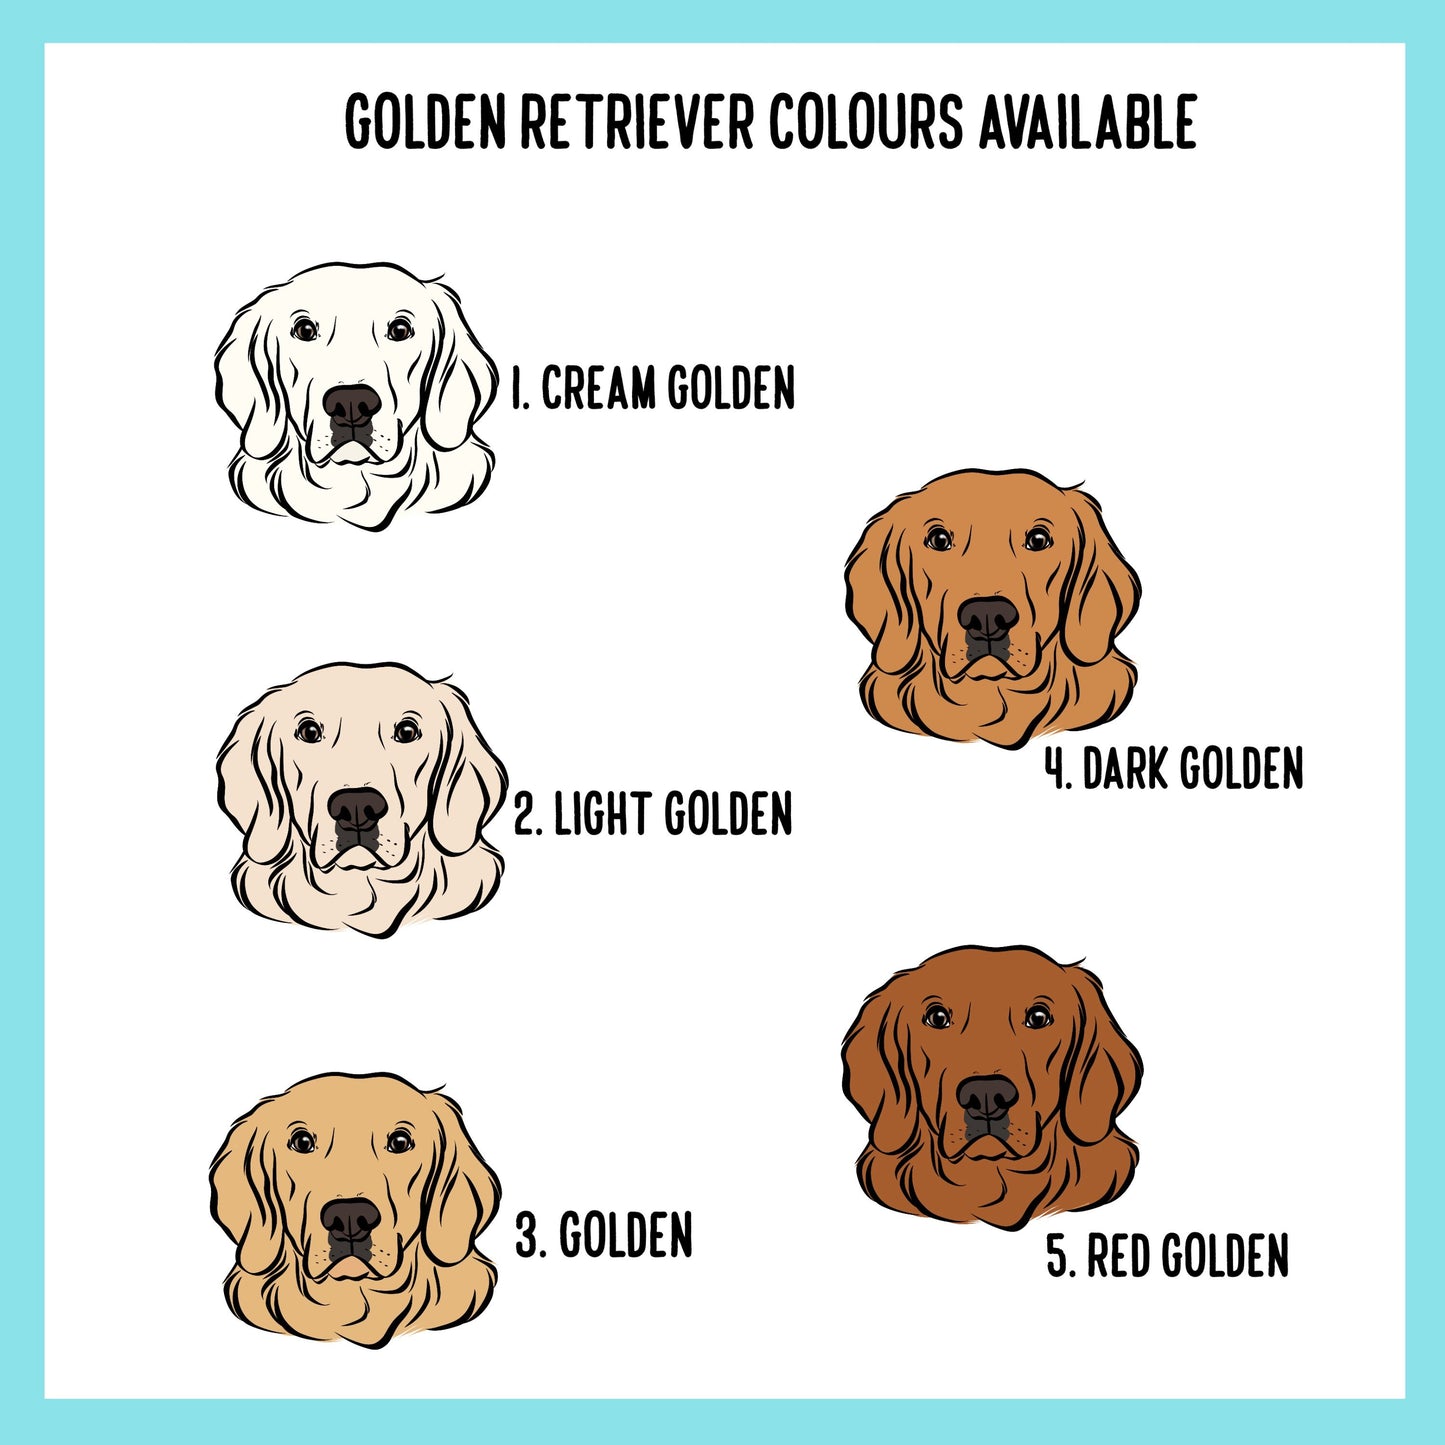 Golden Retriever Christmas Card/ Customisable Message Dog Greeting Card/ Golden Retriever Illustration Card/ Festive Card for Dog Owner